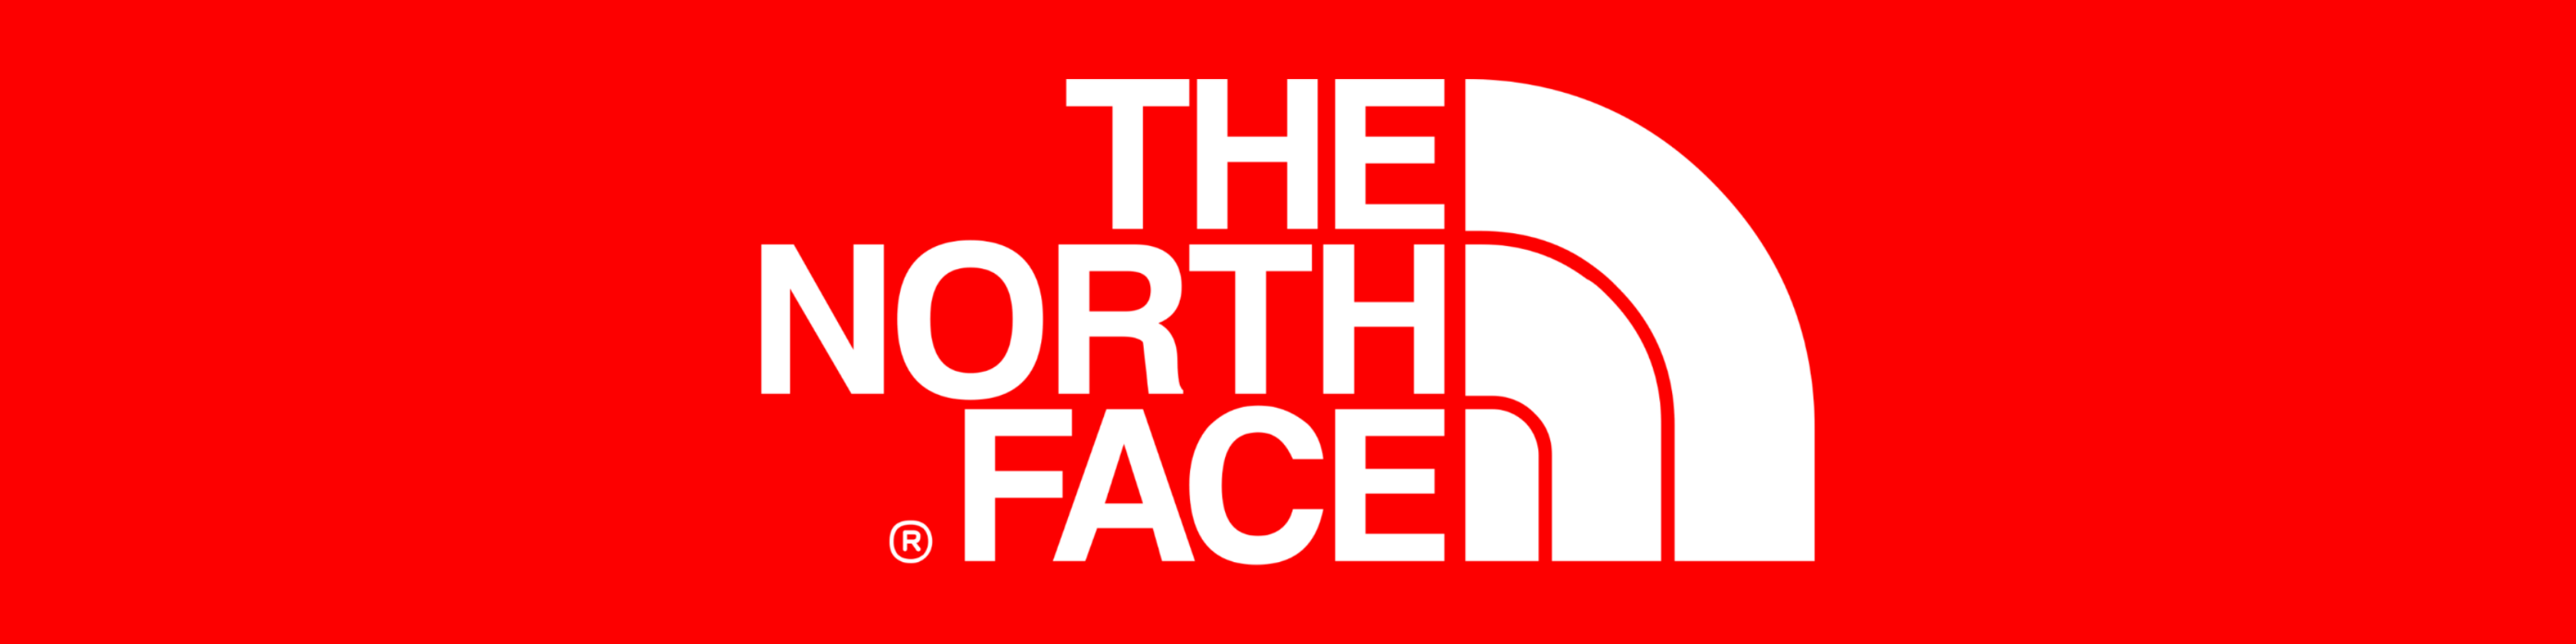 Rebajas The north face